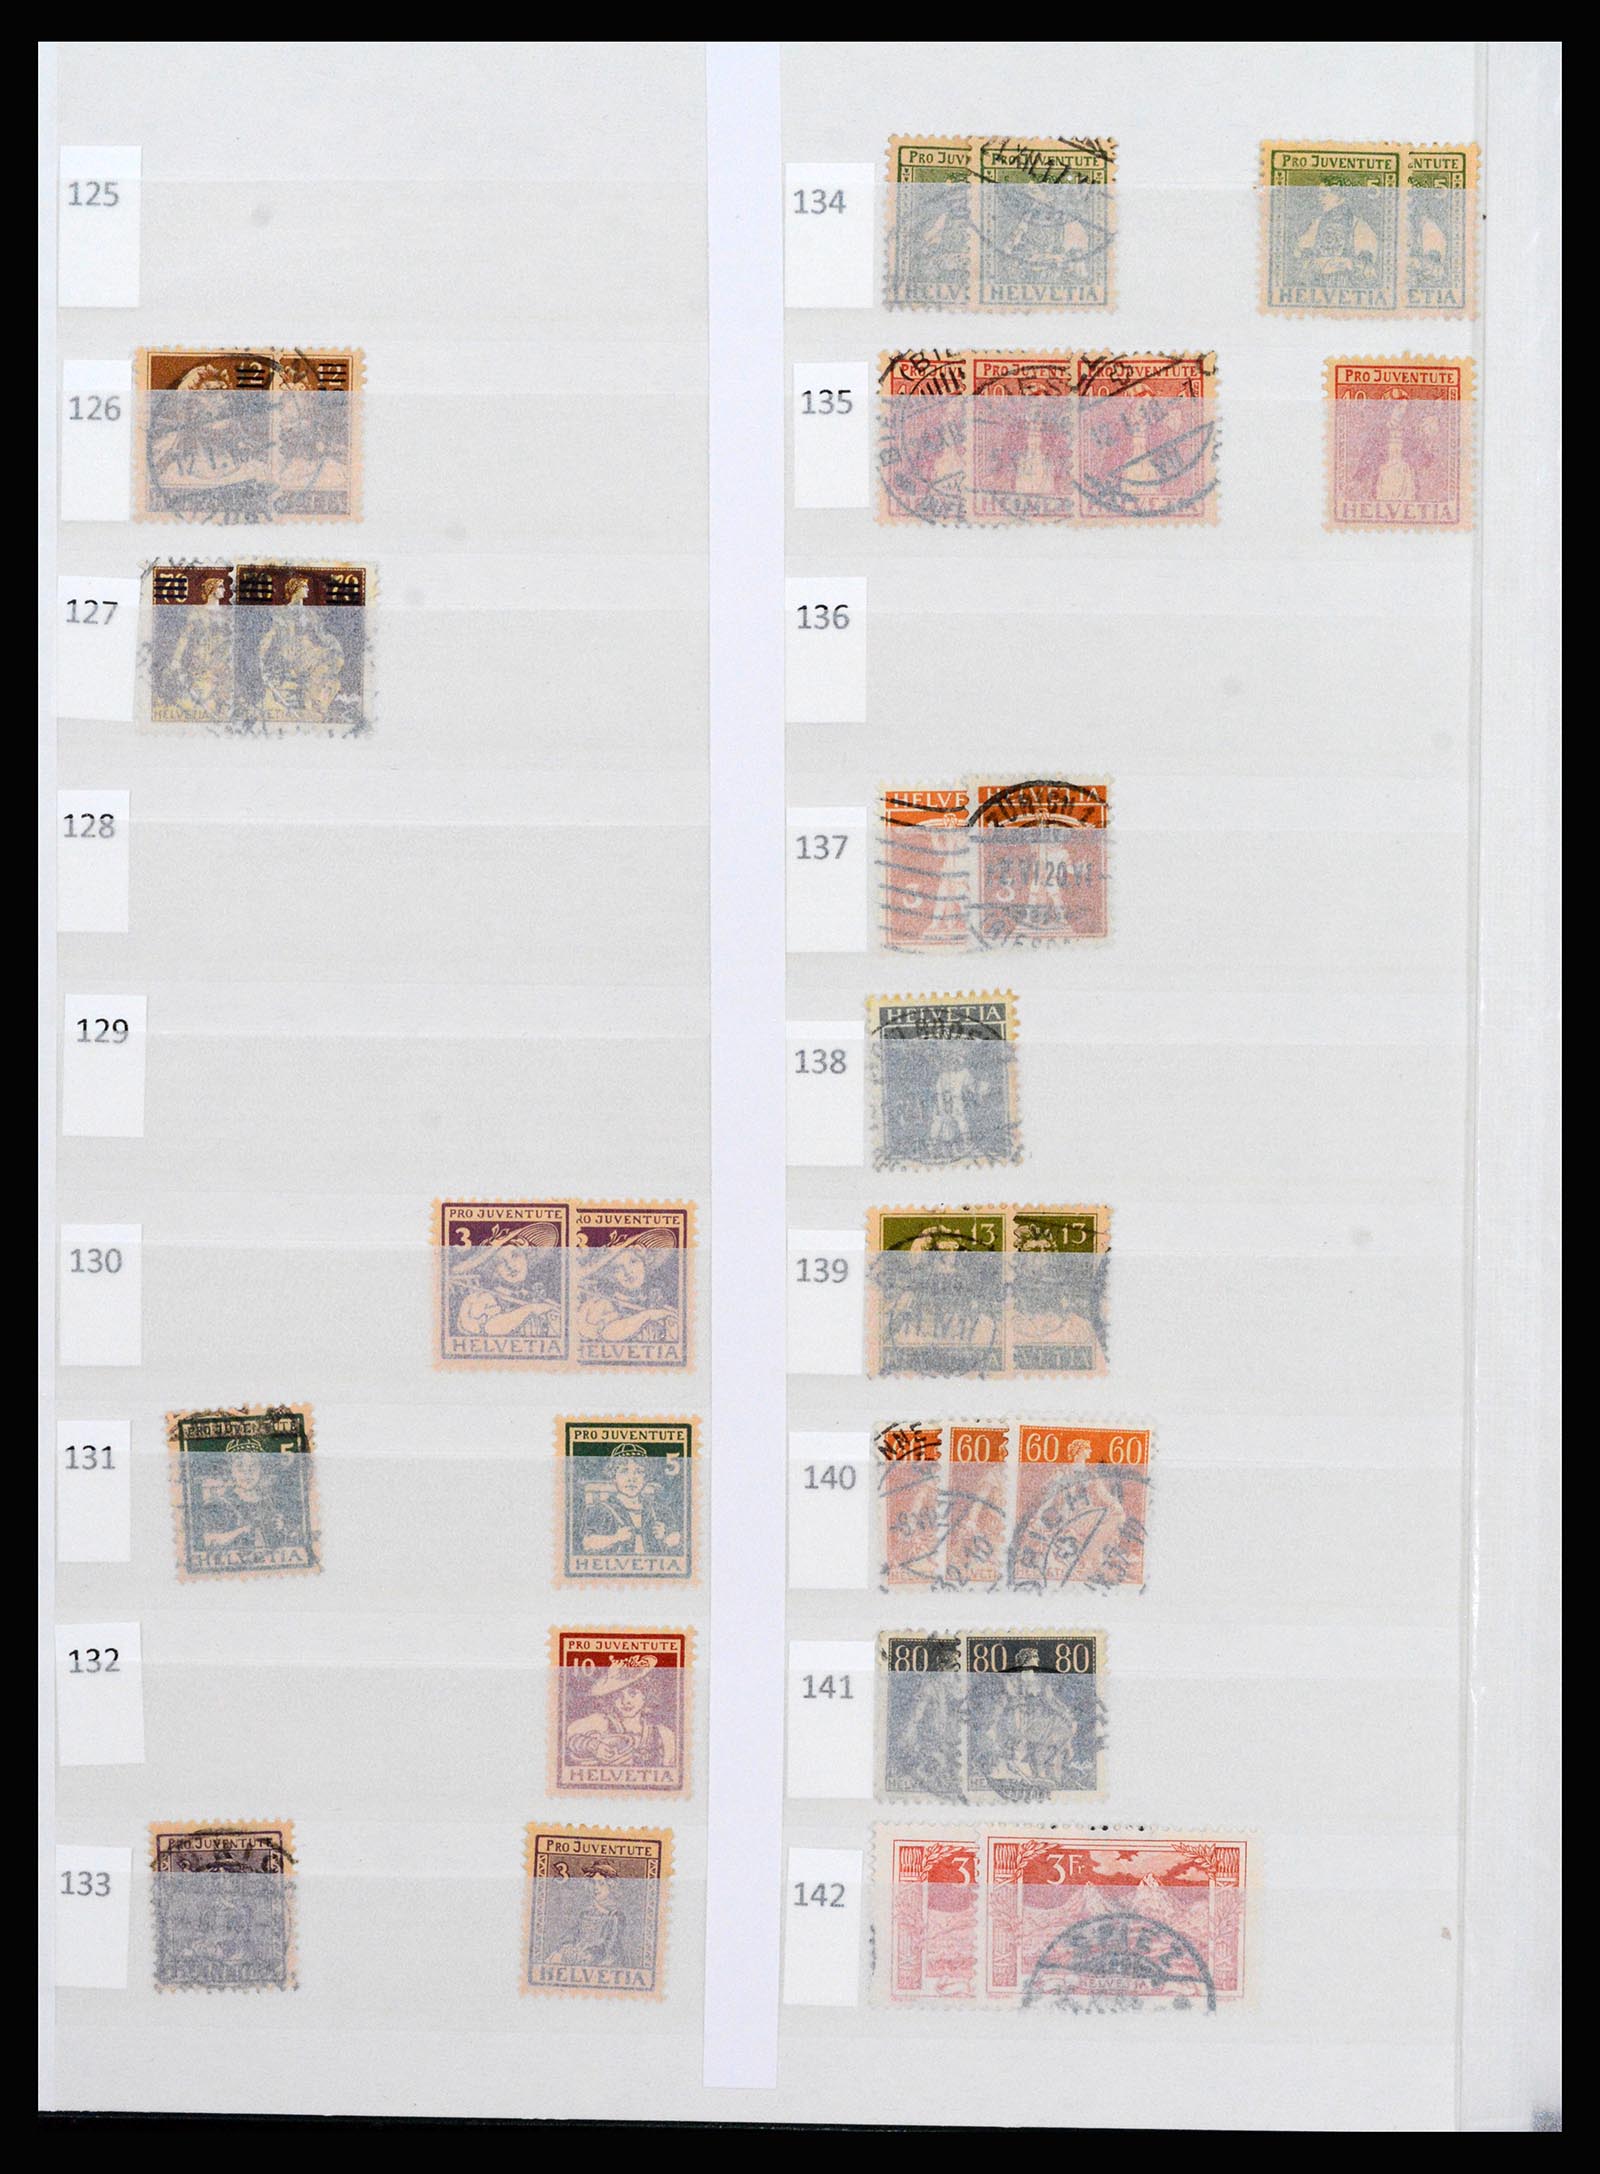 37252 004 - Stamp collection 37252 Switzerland 1900-2011.